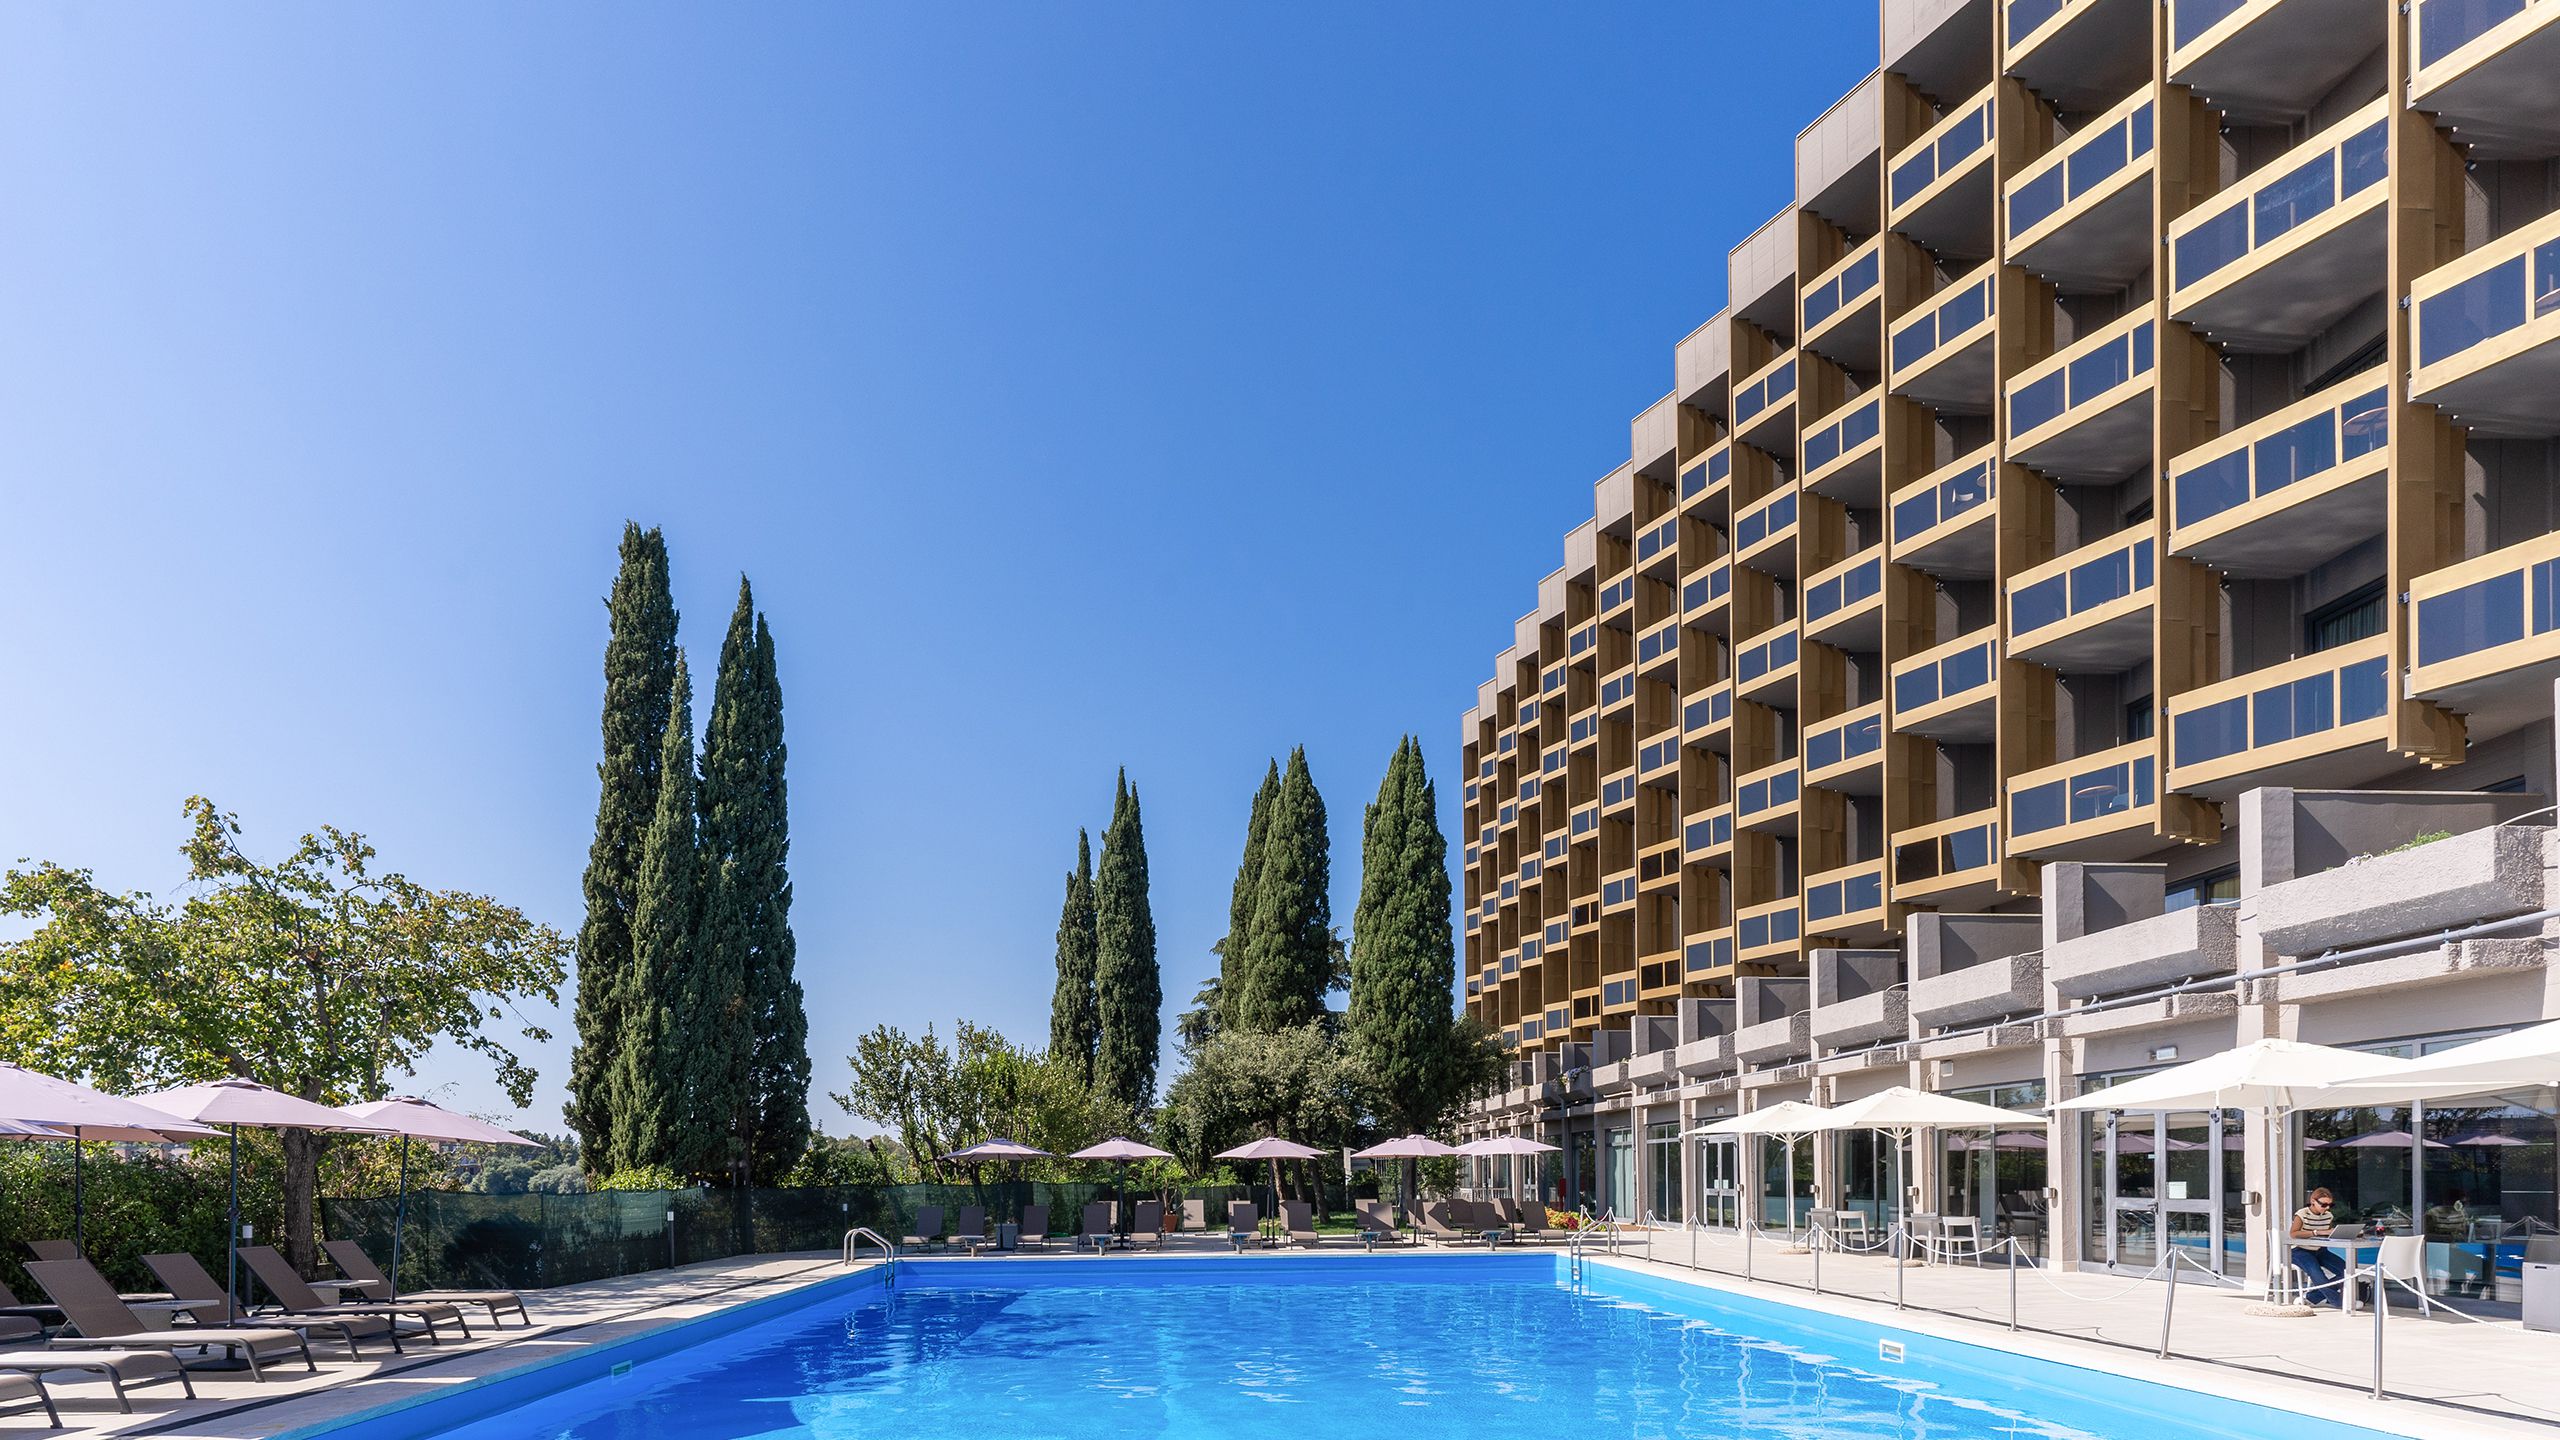 Midas-Palace-Hotel-Rome-Pool-061